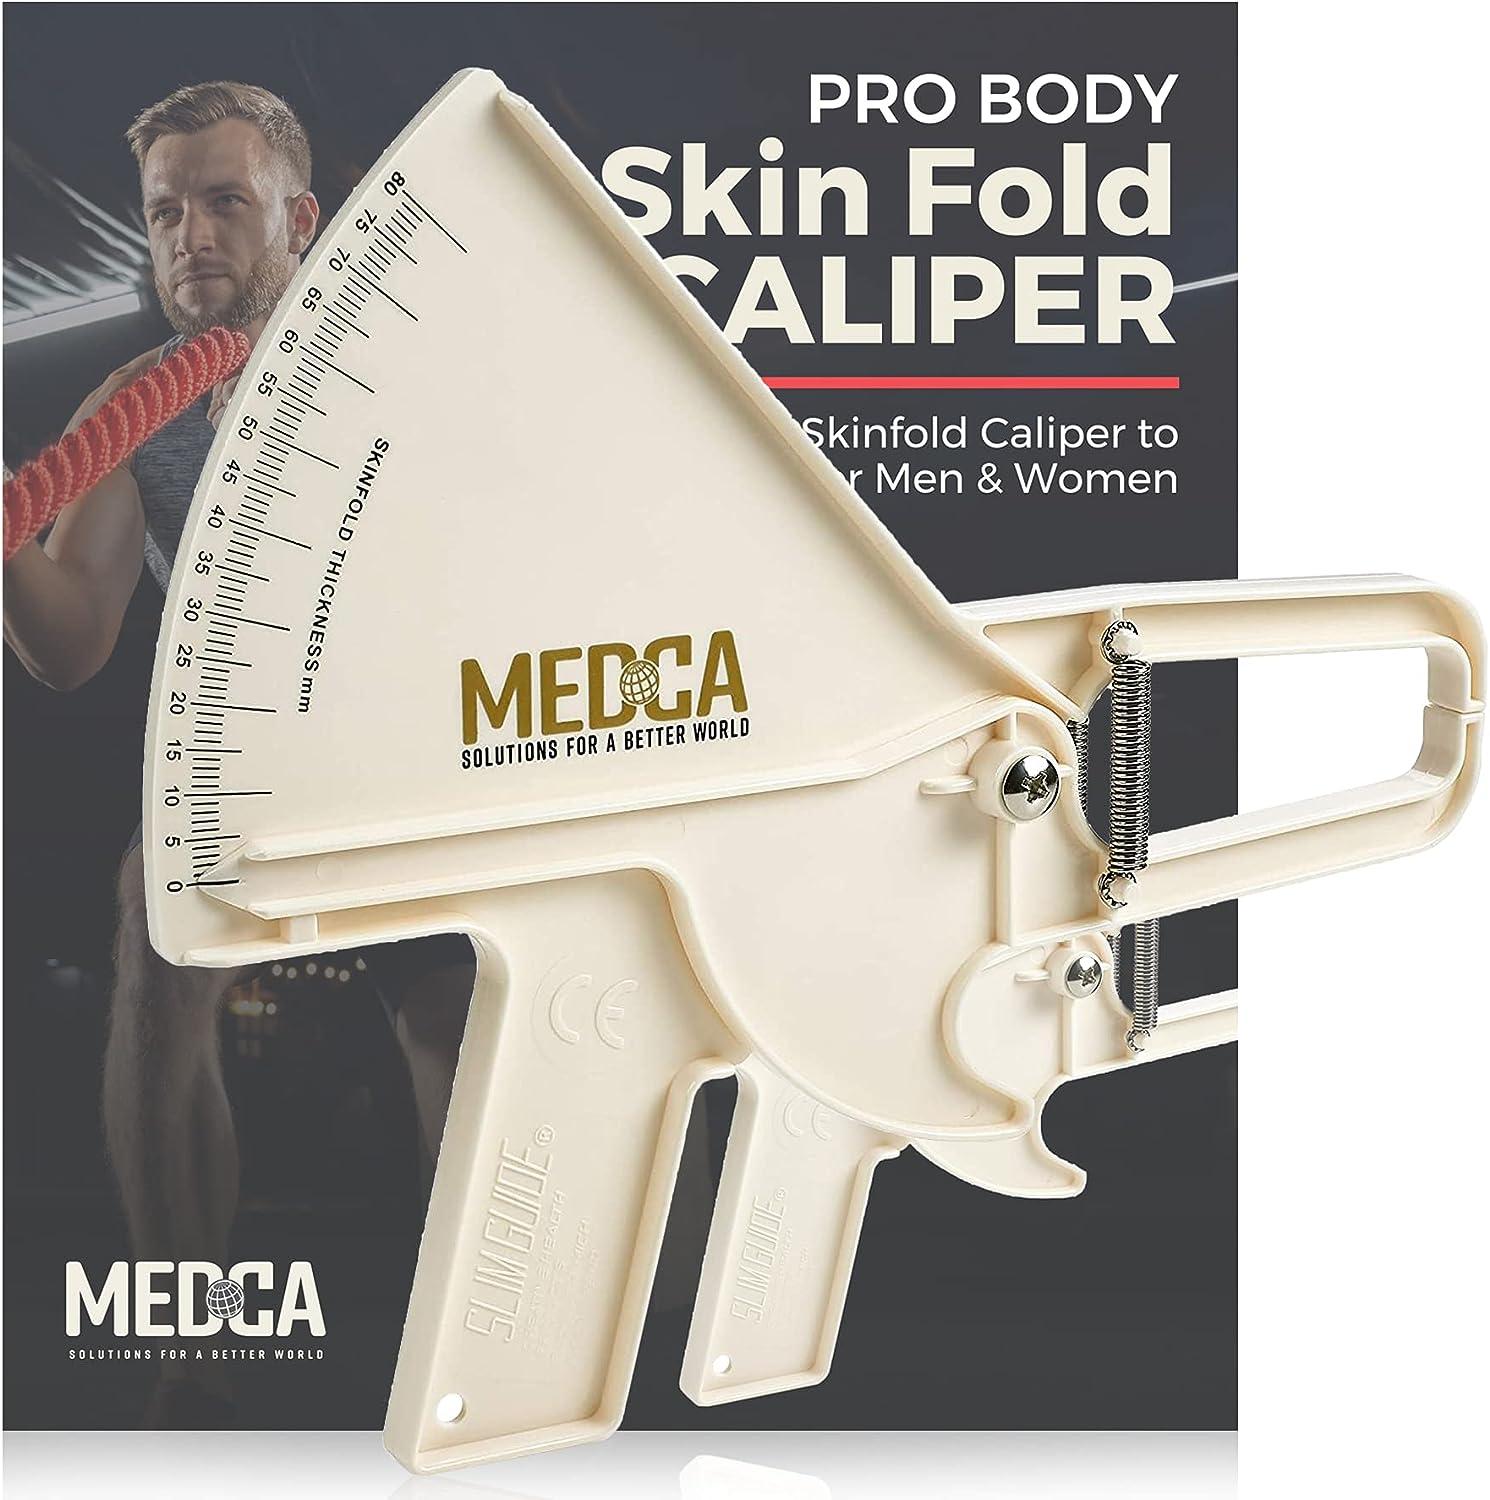 Body Fat Caliper - Handheld BMI Body Fat Measurement Device - Skinfold  Caliper Measures Body Fat for Men and Women